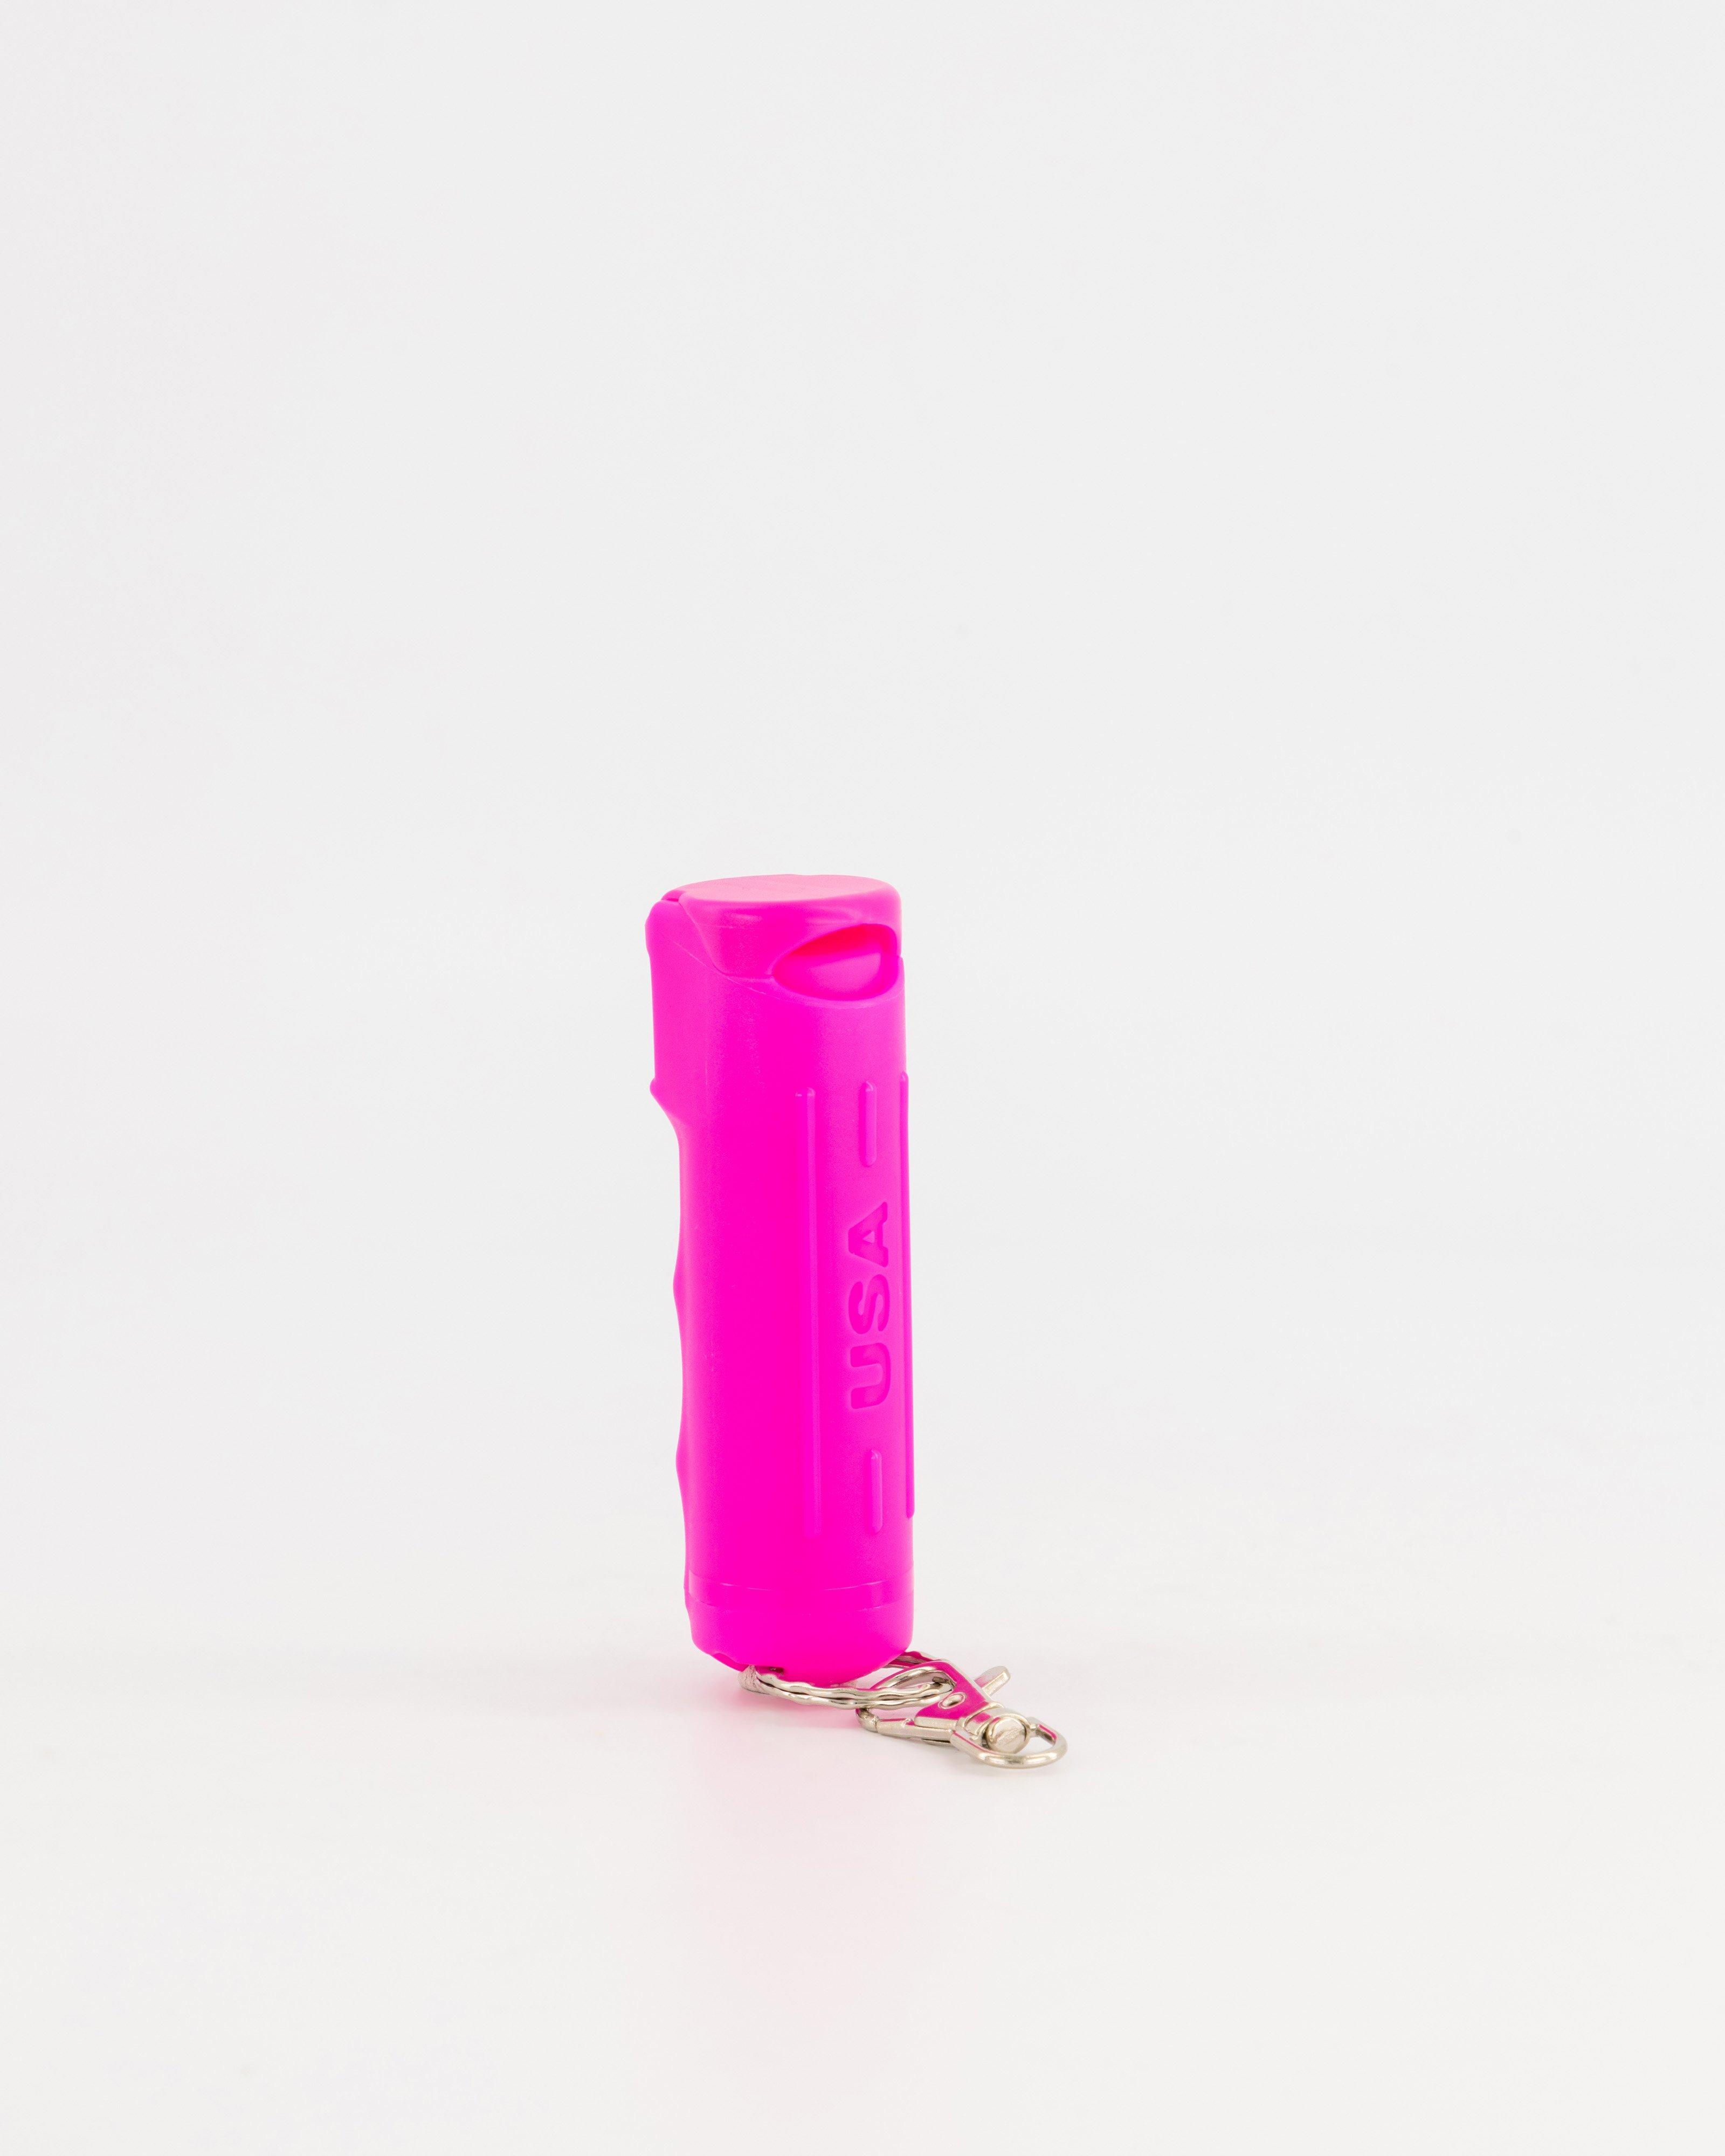 Mace KeyGuard Hard Case Pepper Spray -  Pink